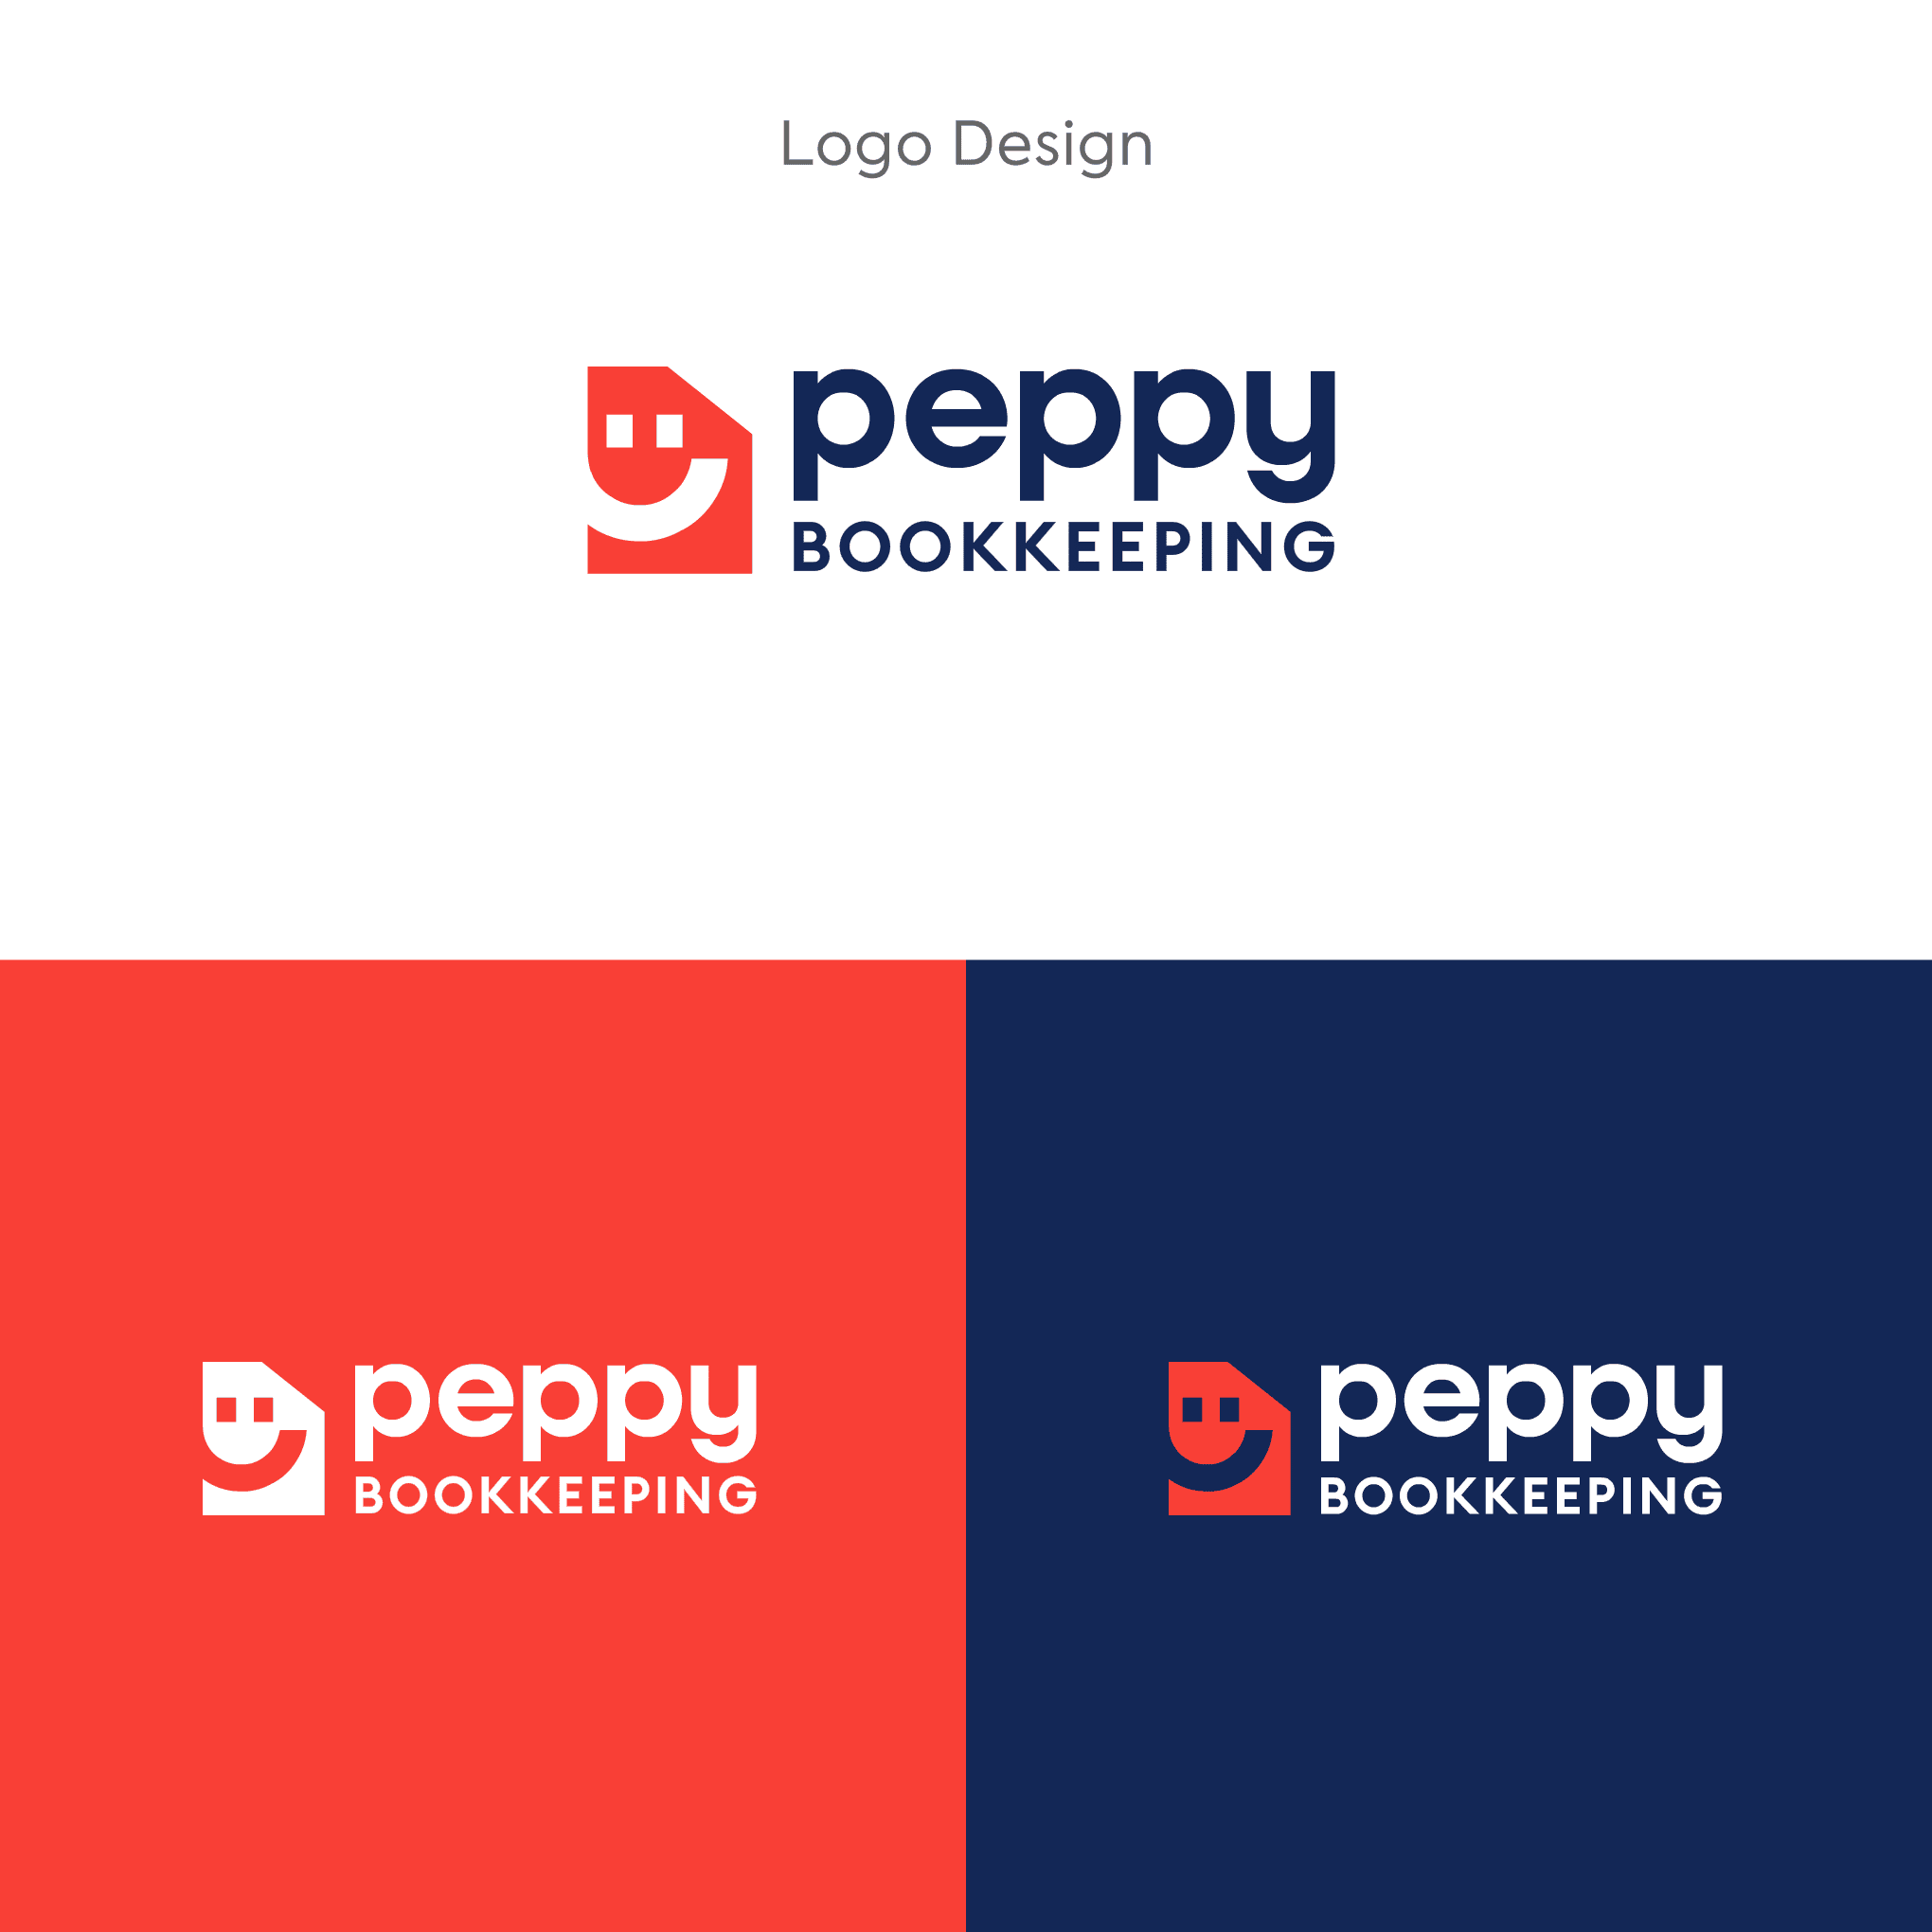 01 - Logo Design (2)